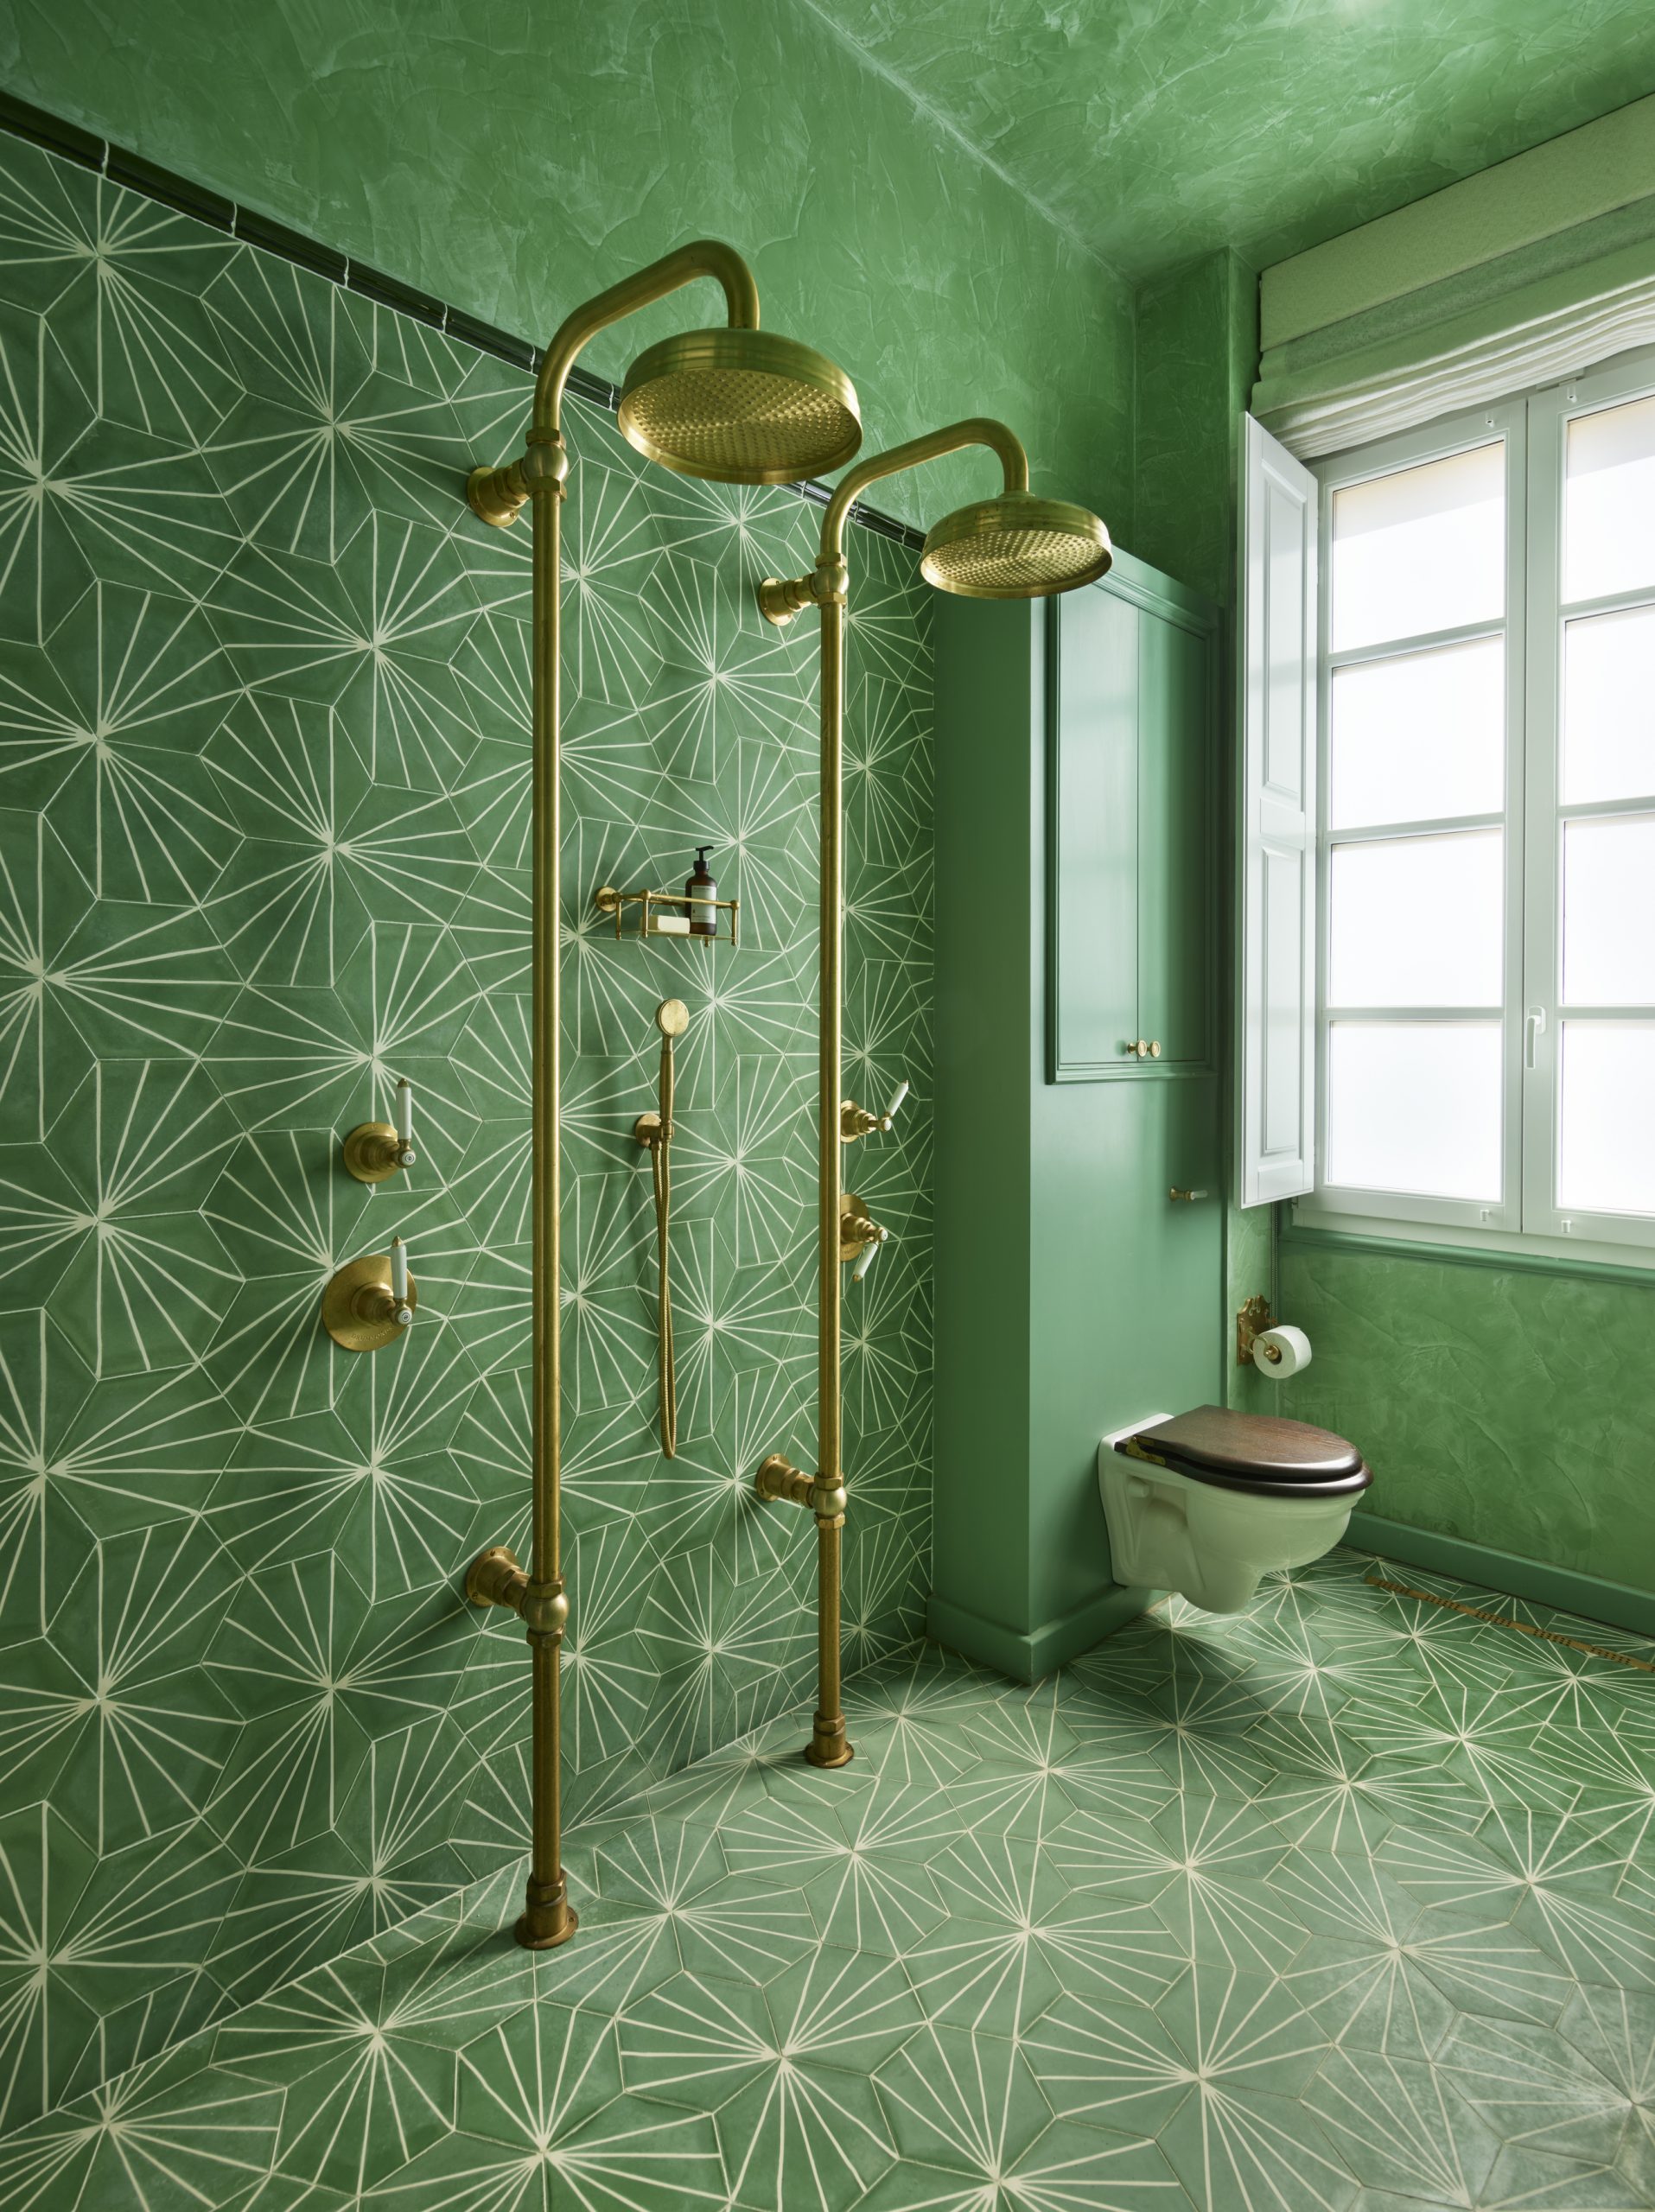 Cool Bathroom Tile Ideas From Metro Tiles To Fish Scale Herringbone Livingetc